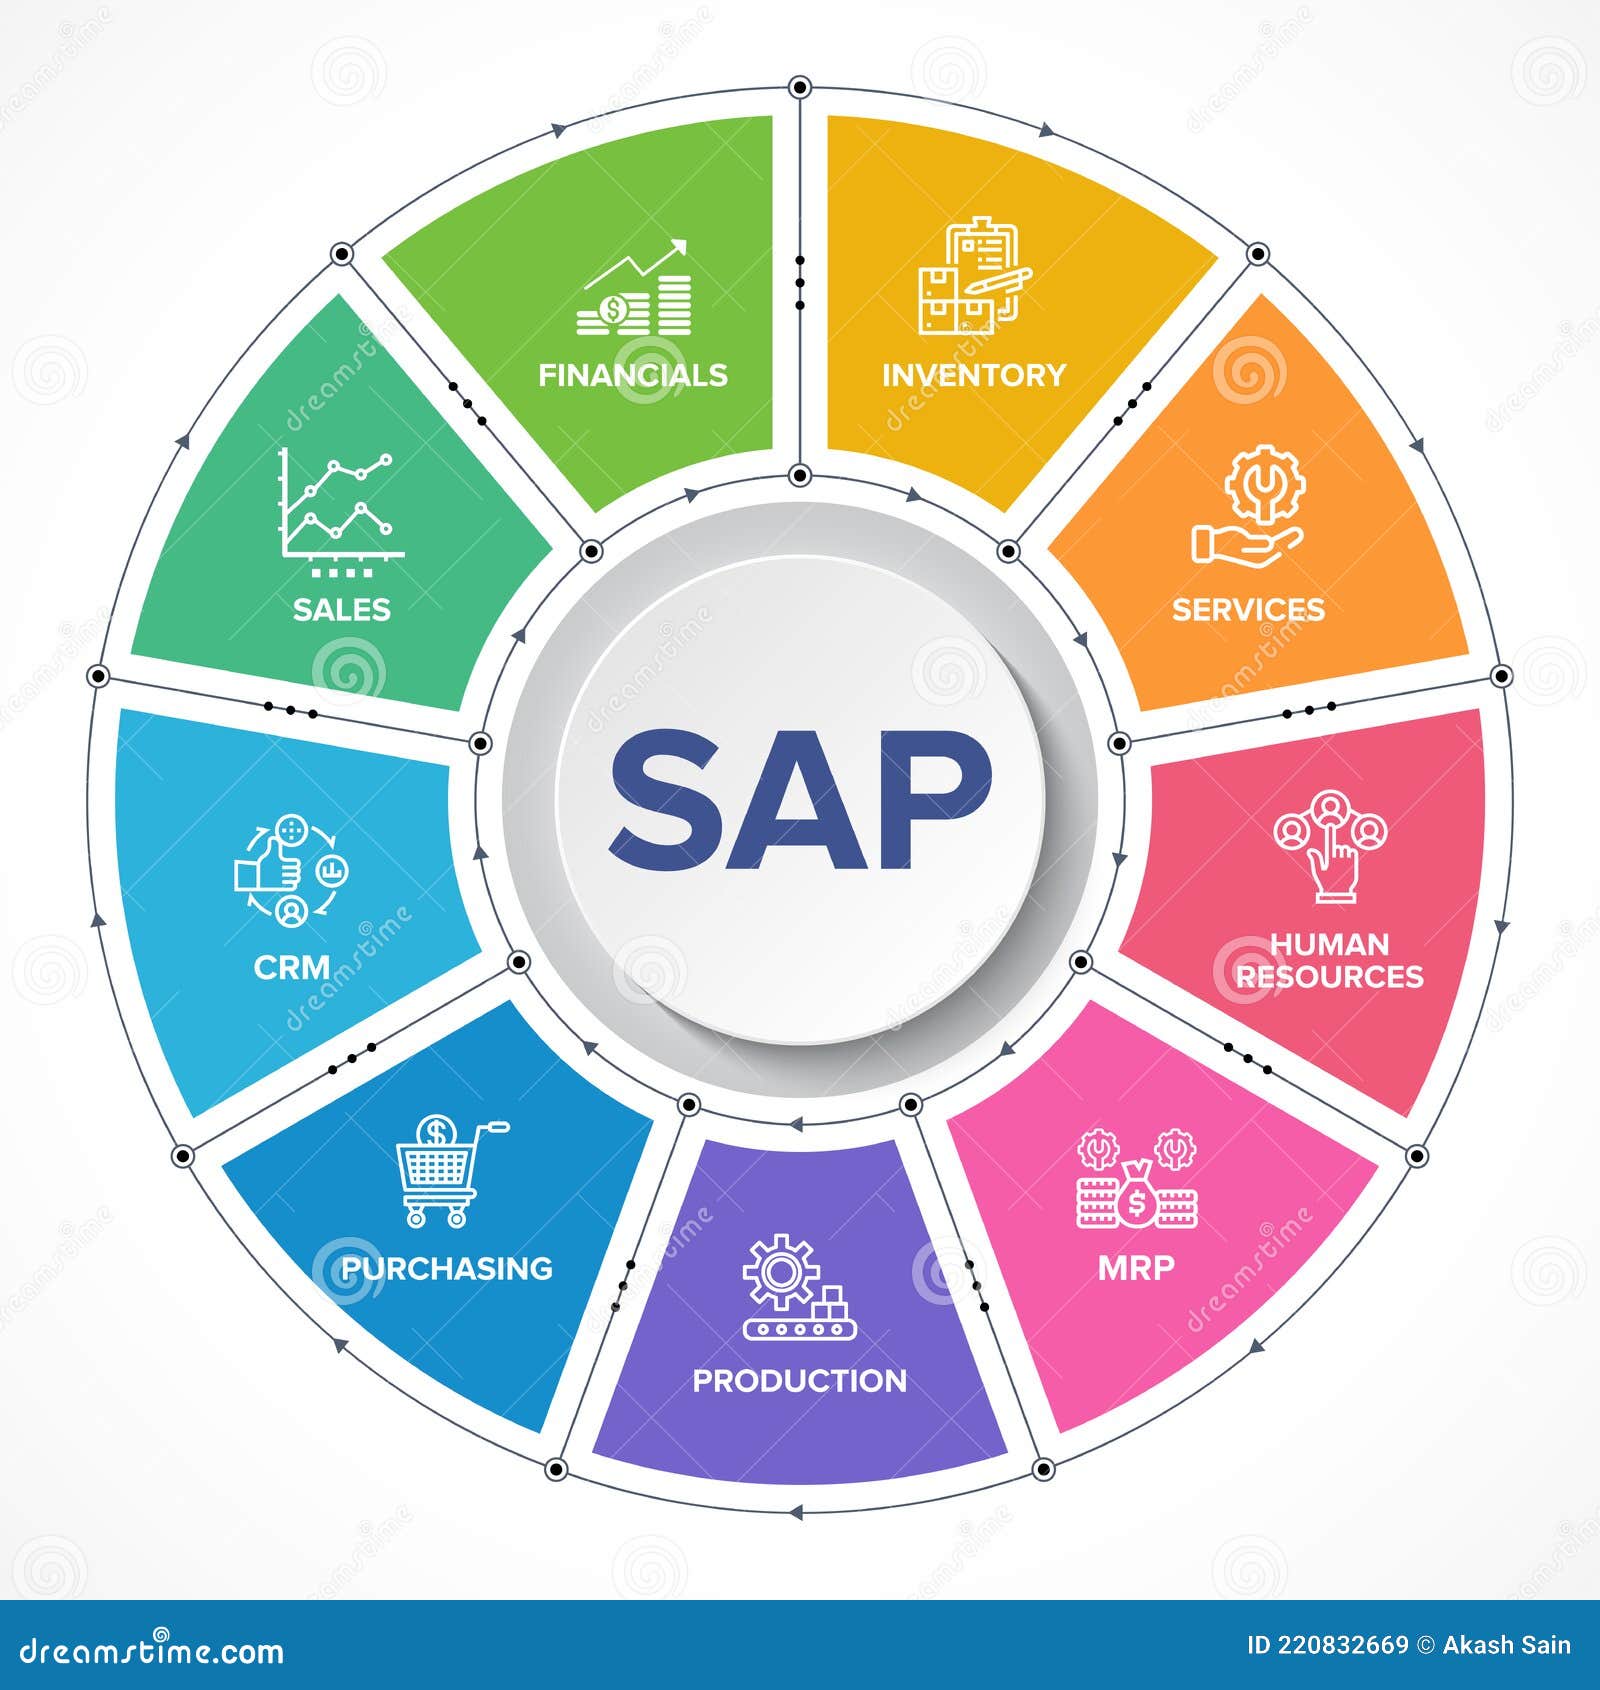 enterprise resource planning with sap